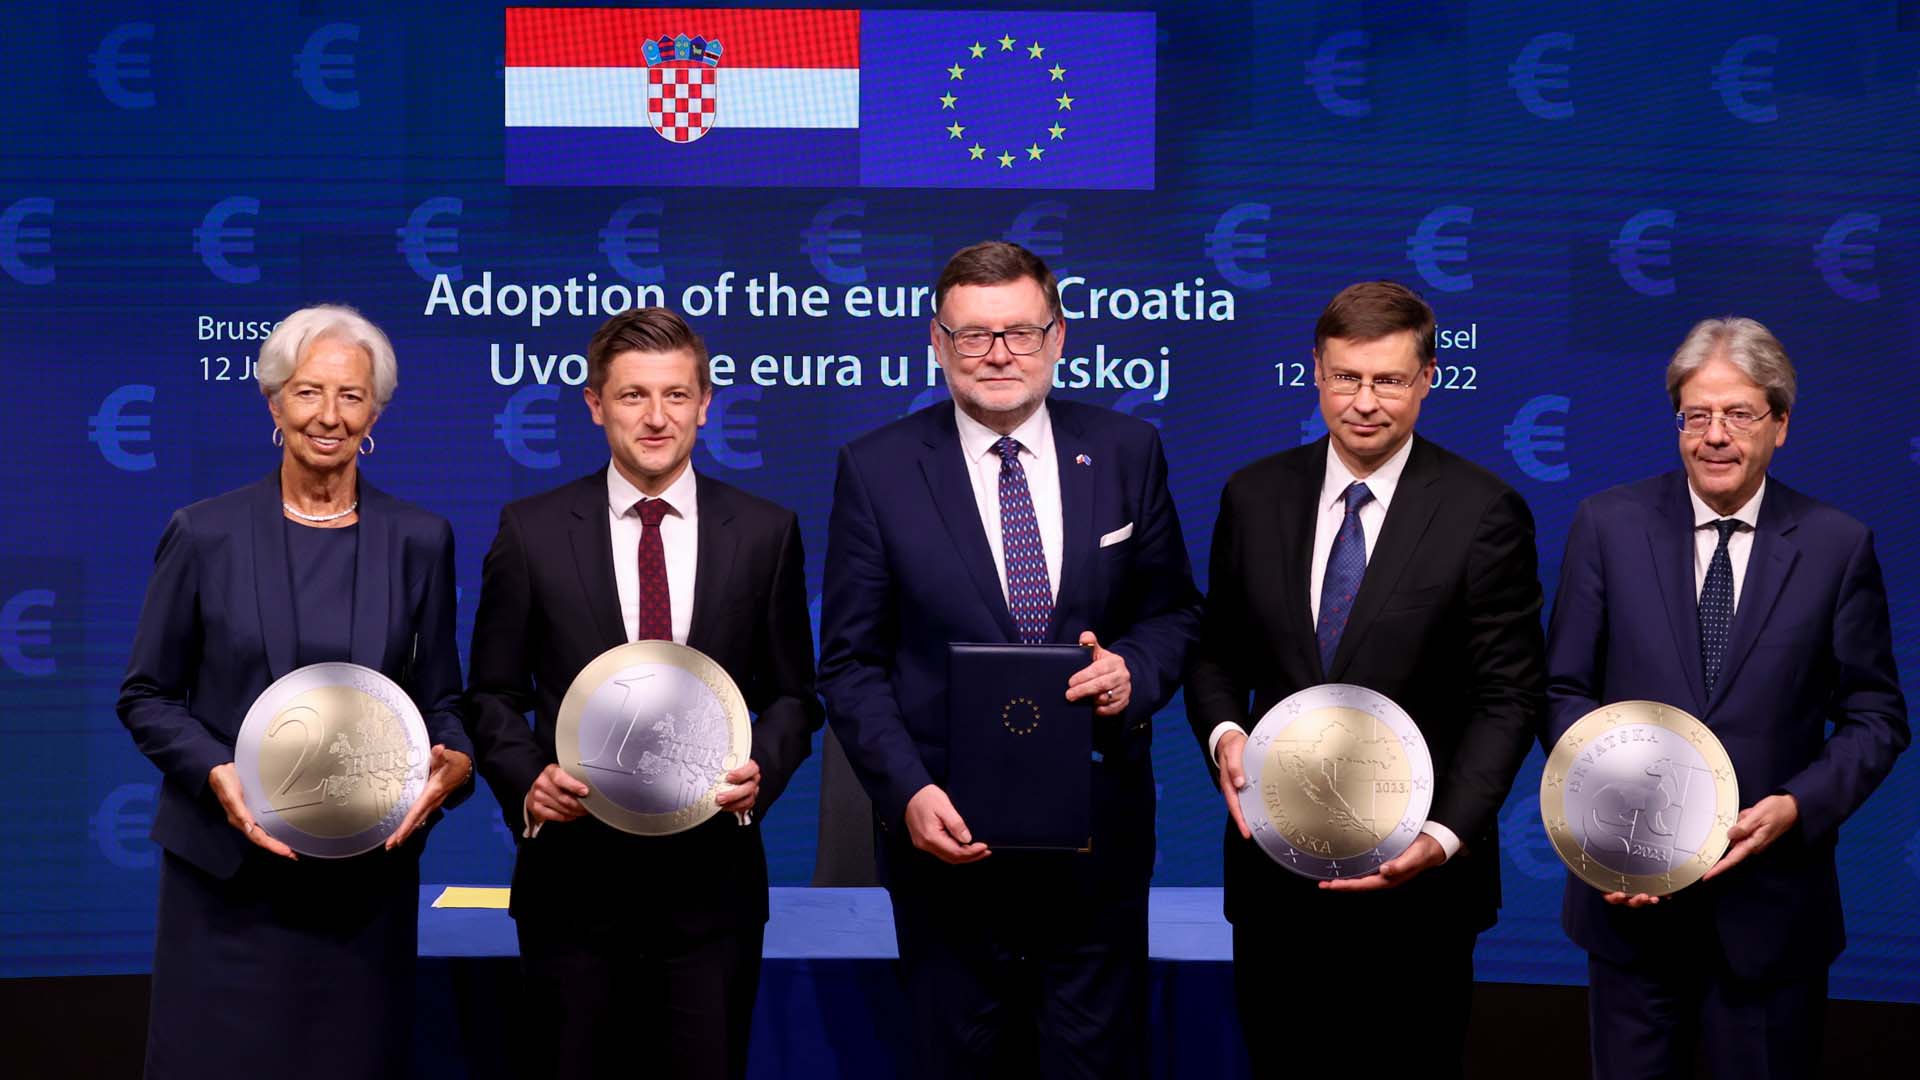 Croatia to introduce the euro on 1 January 2023